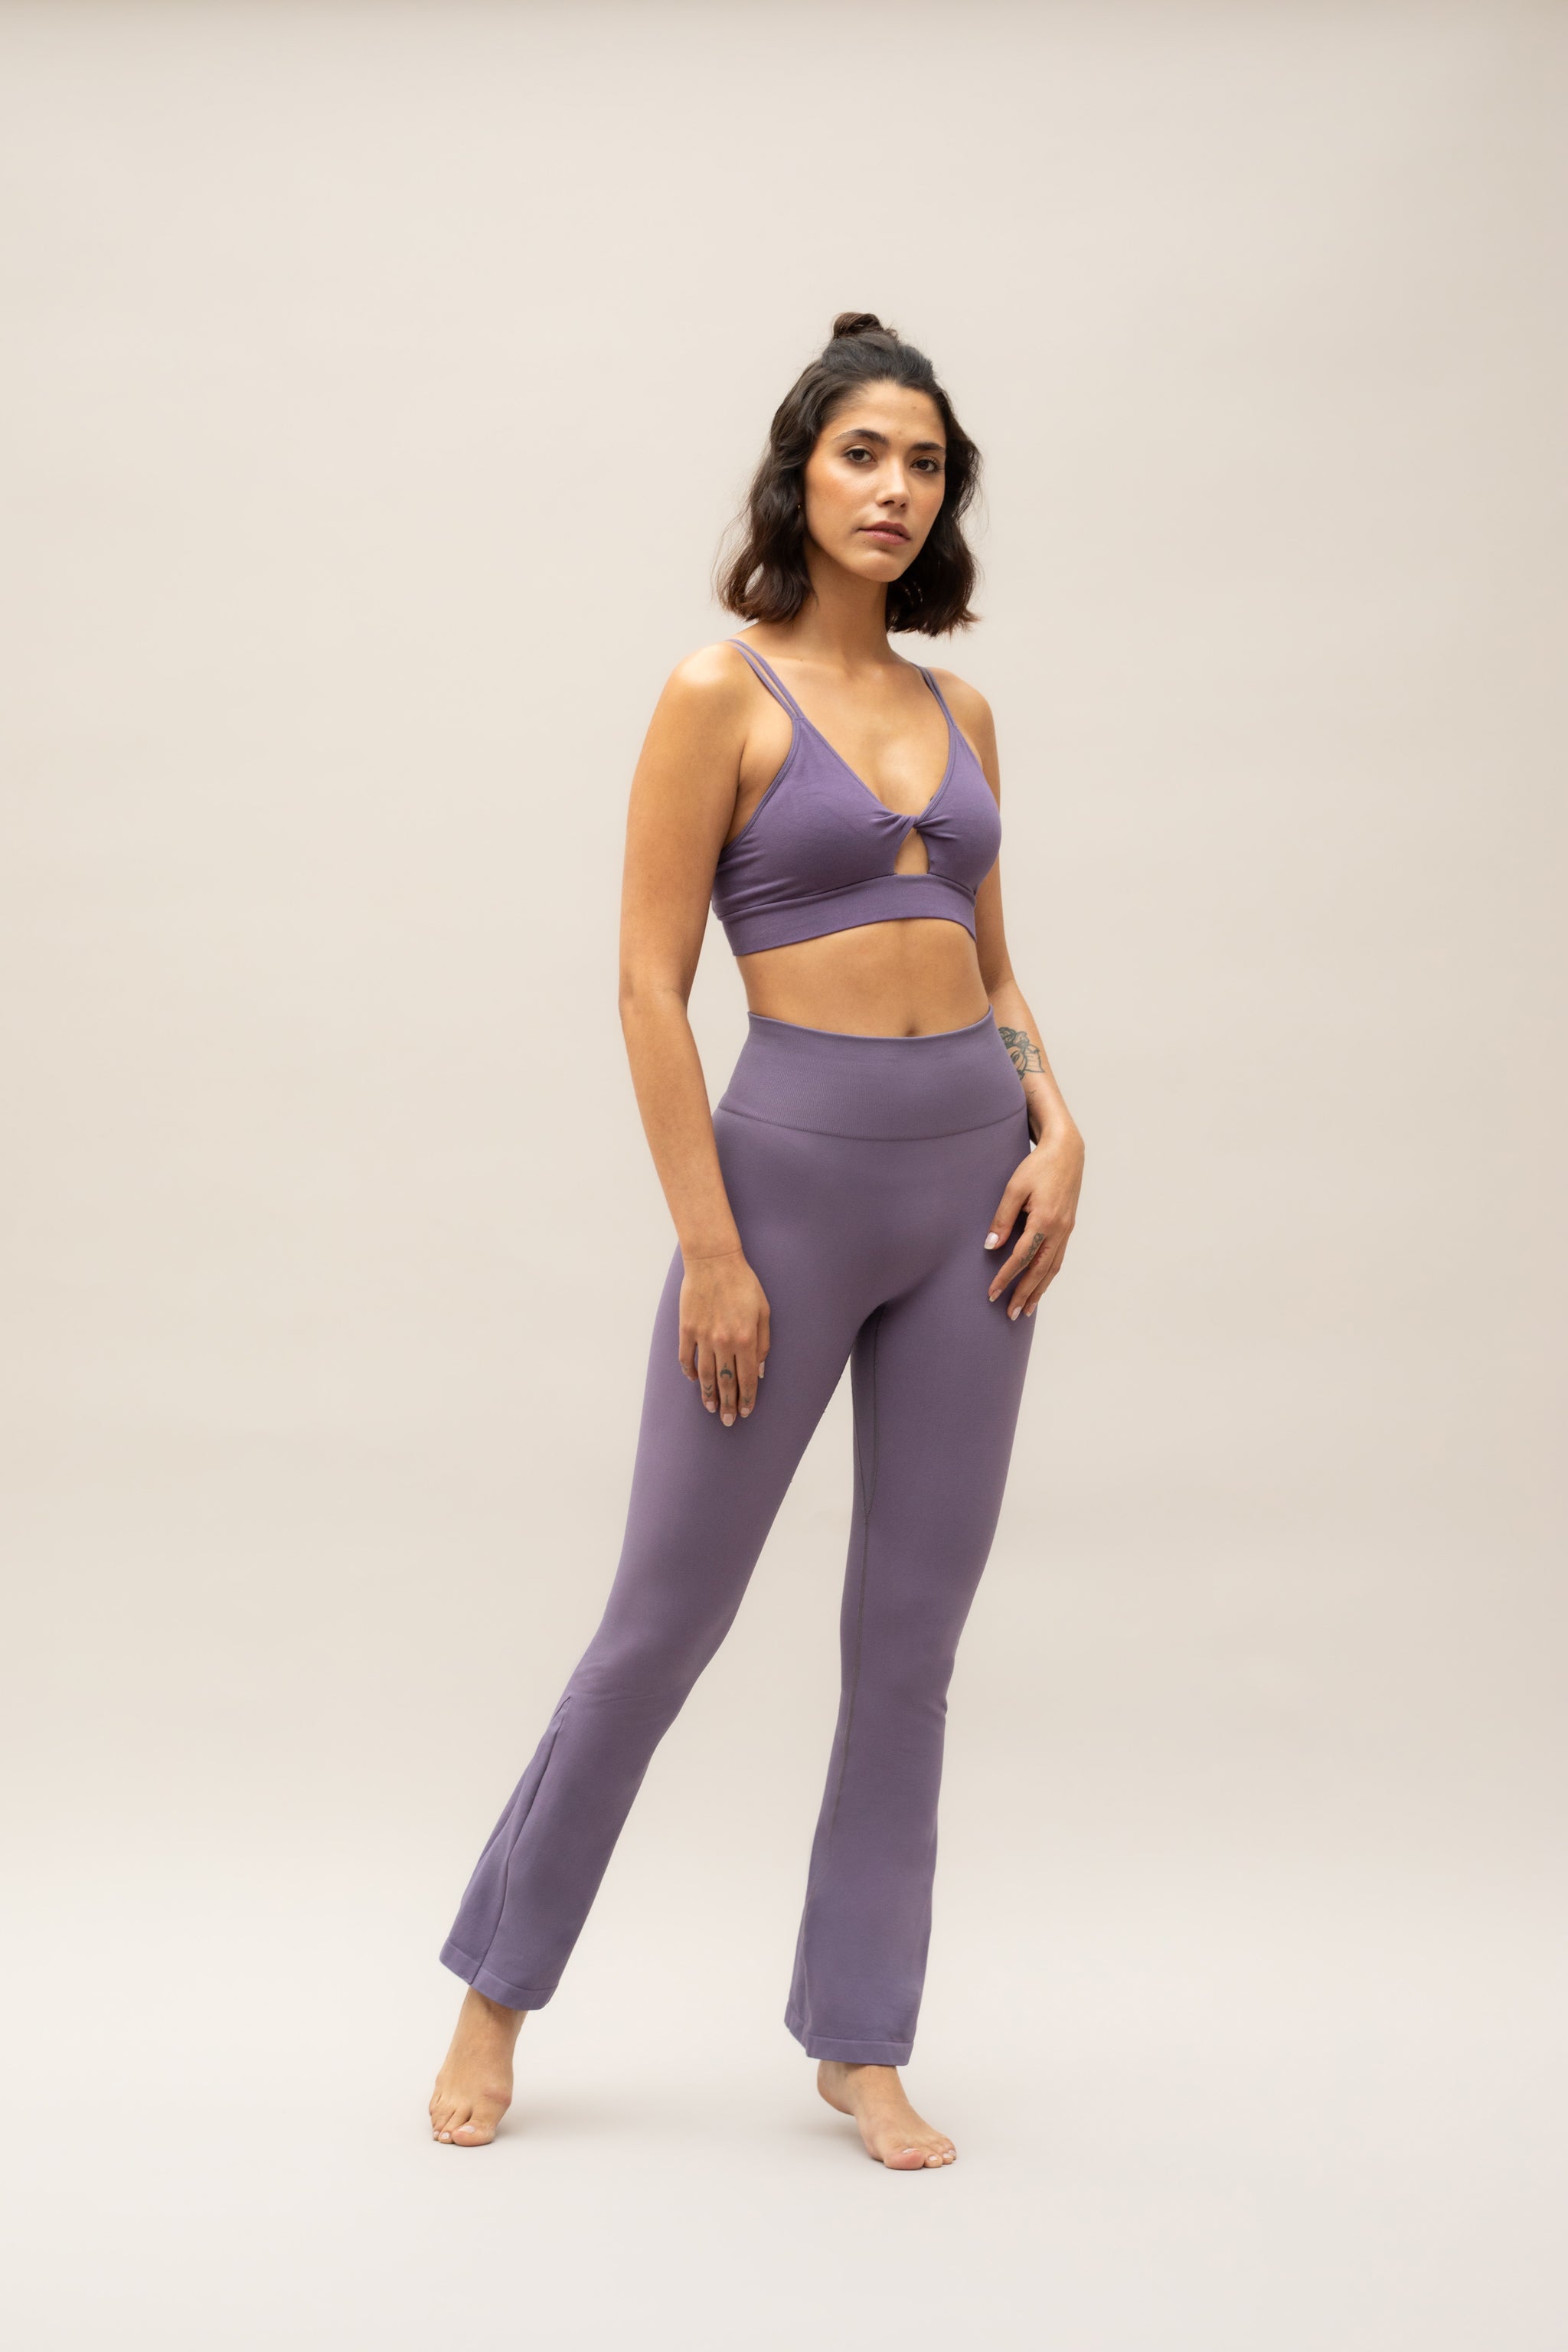 Purple flare leggings with purple supportive sports bra by sustainable women's activewear brand, Jilla.